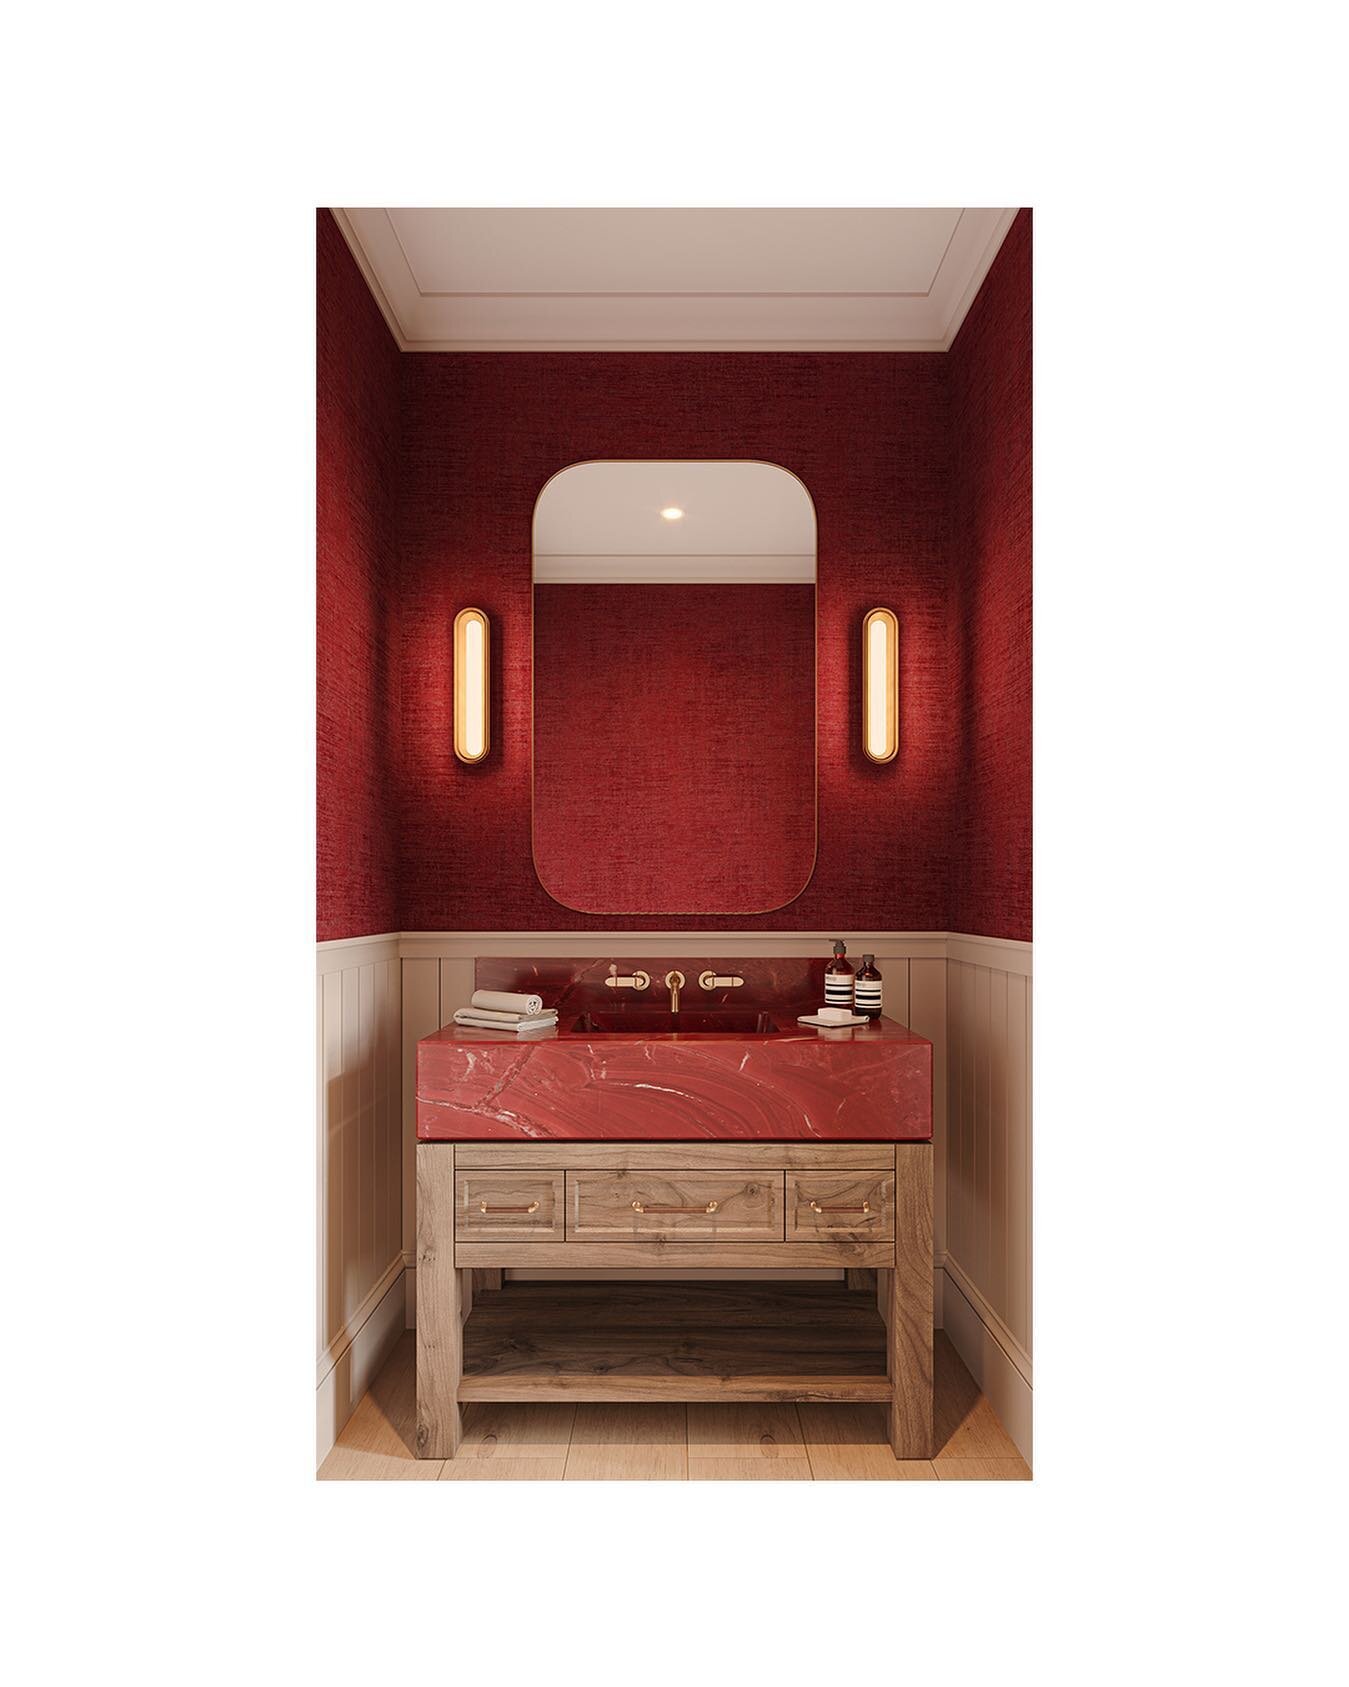 Powder Room !!! 
.
.
.
#traditional #powder #luxurious #architecture #design #interiorstyling 
#interiordesign #bathroom #bath #stone
#wood #metal #glass #marble #brass
#custom #hamptons #highend #oak #render #alliedmaker #home #photography #hamptons